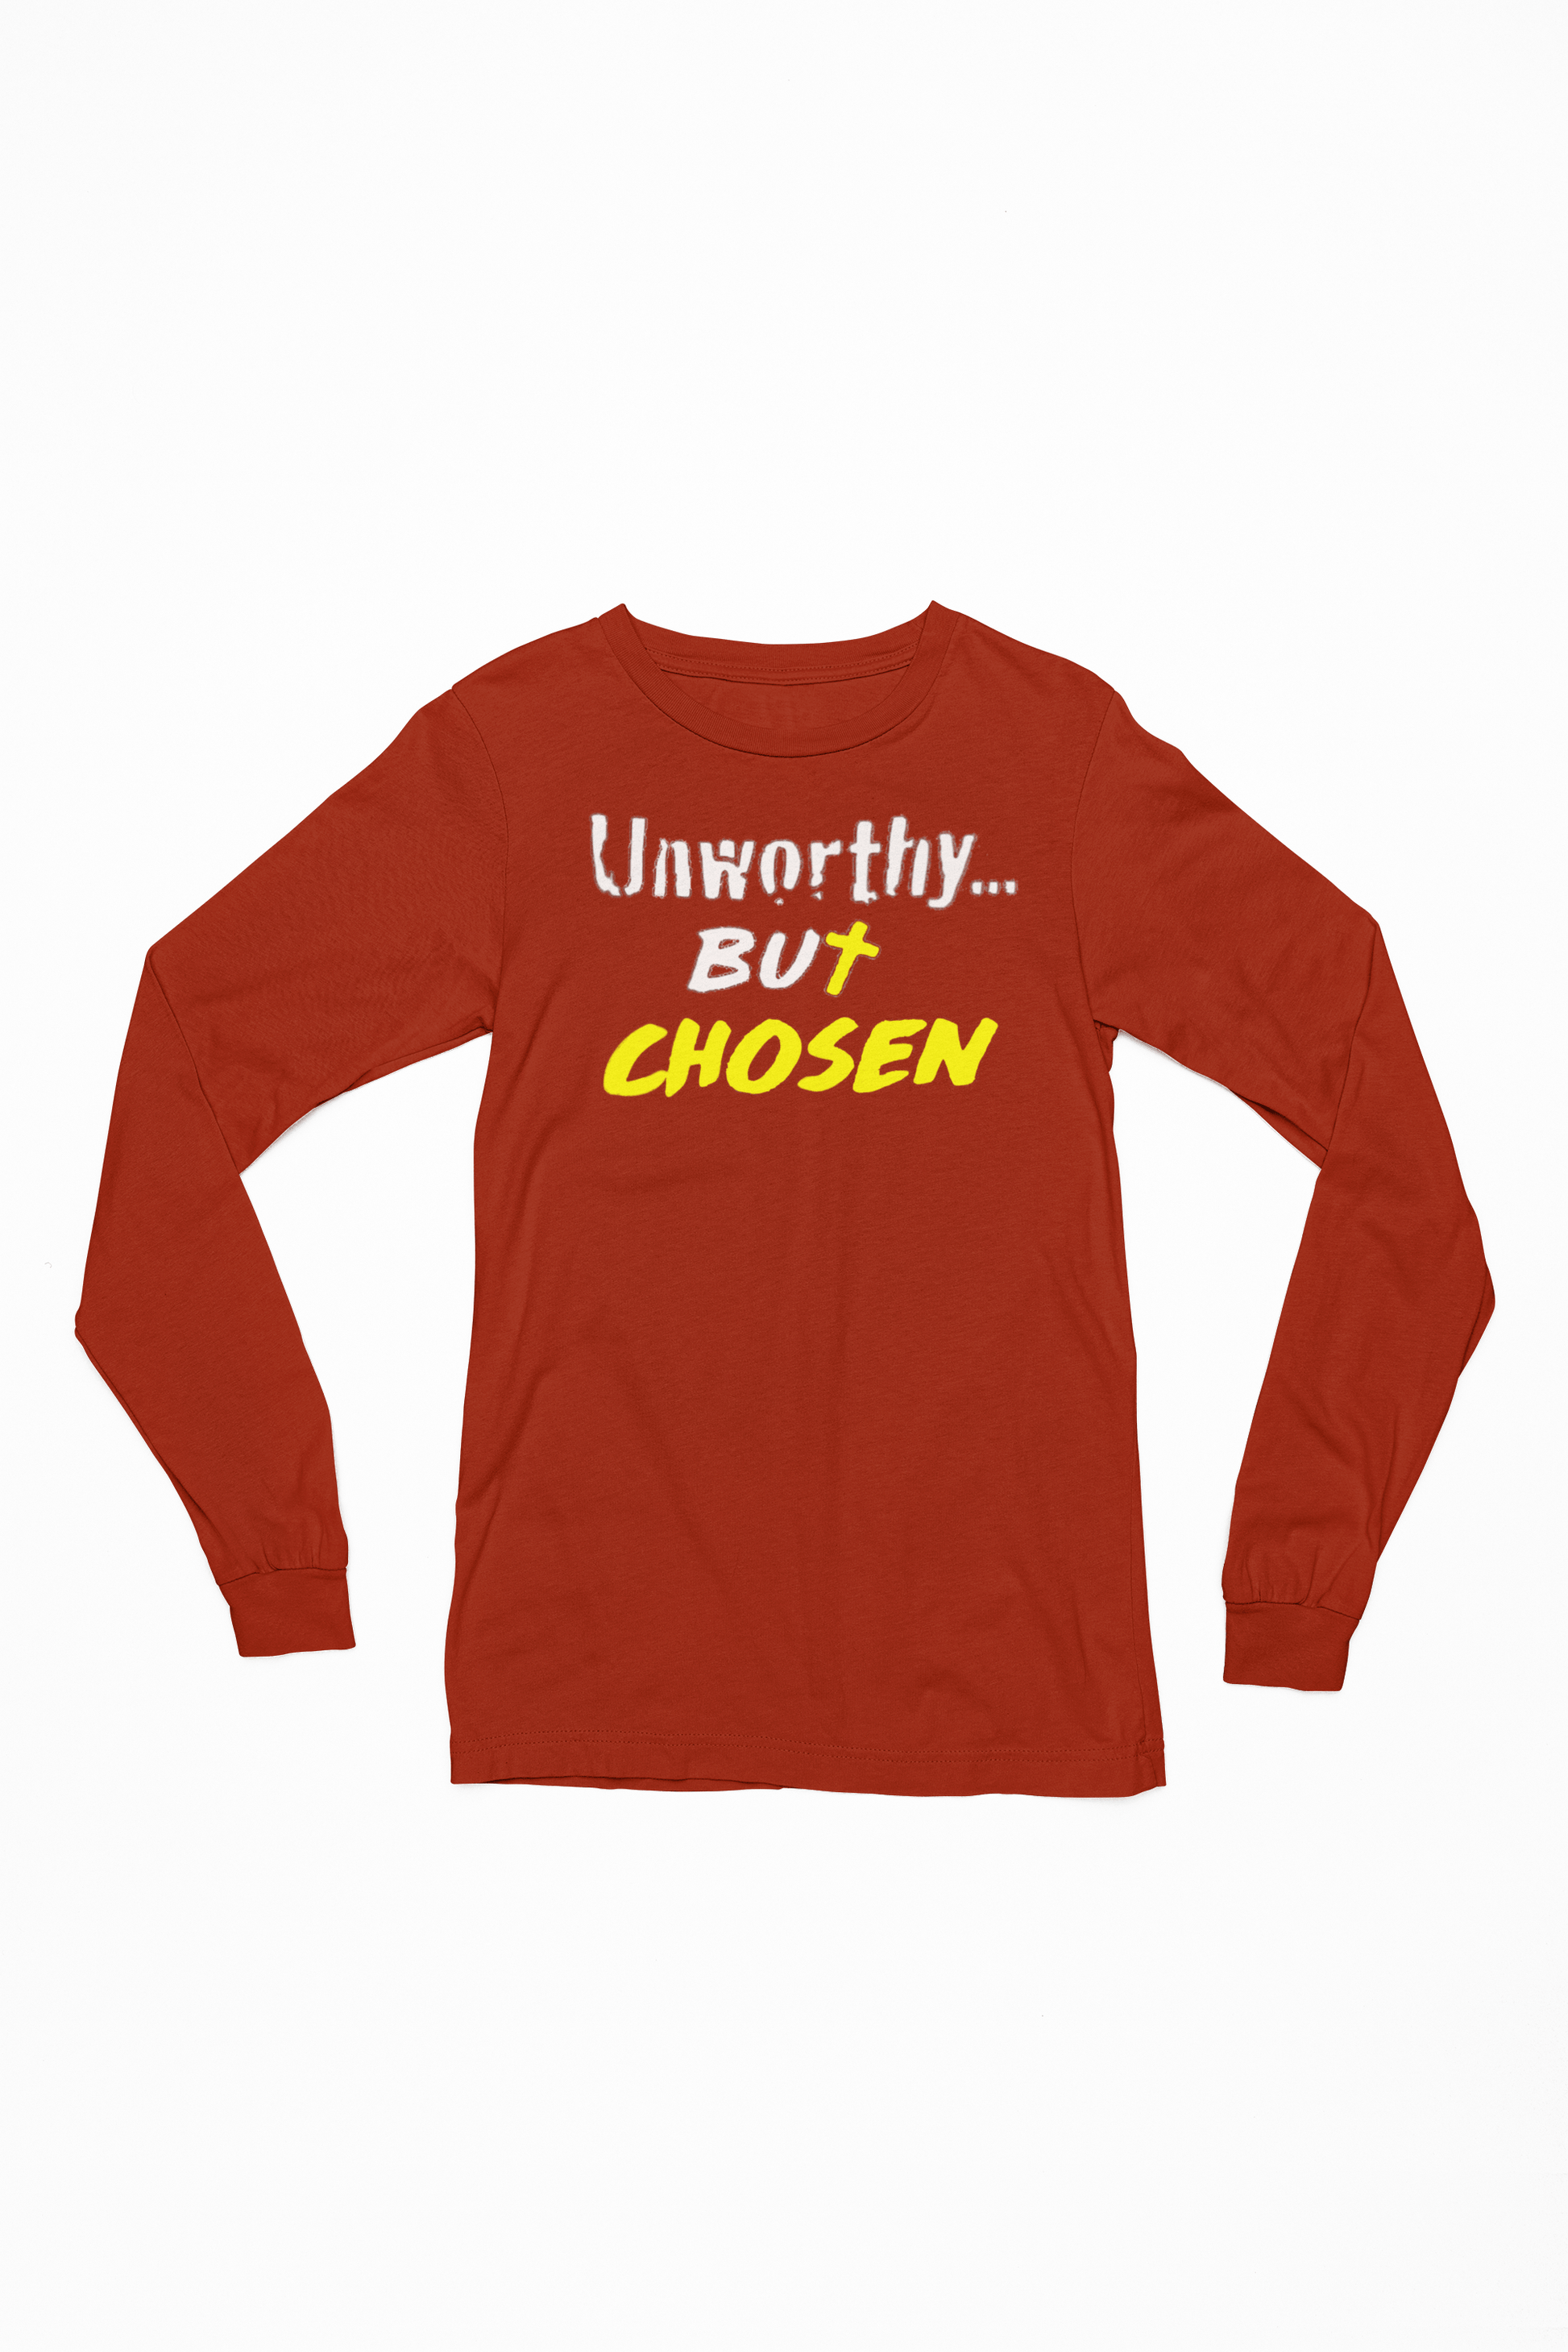 Wrighteous Wear Long-sleeve Cardinal / S Unworthy But Chosen Unisex Christian Long Sleeve T-Shirt